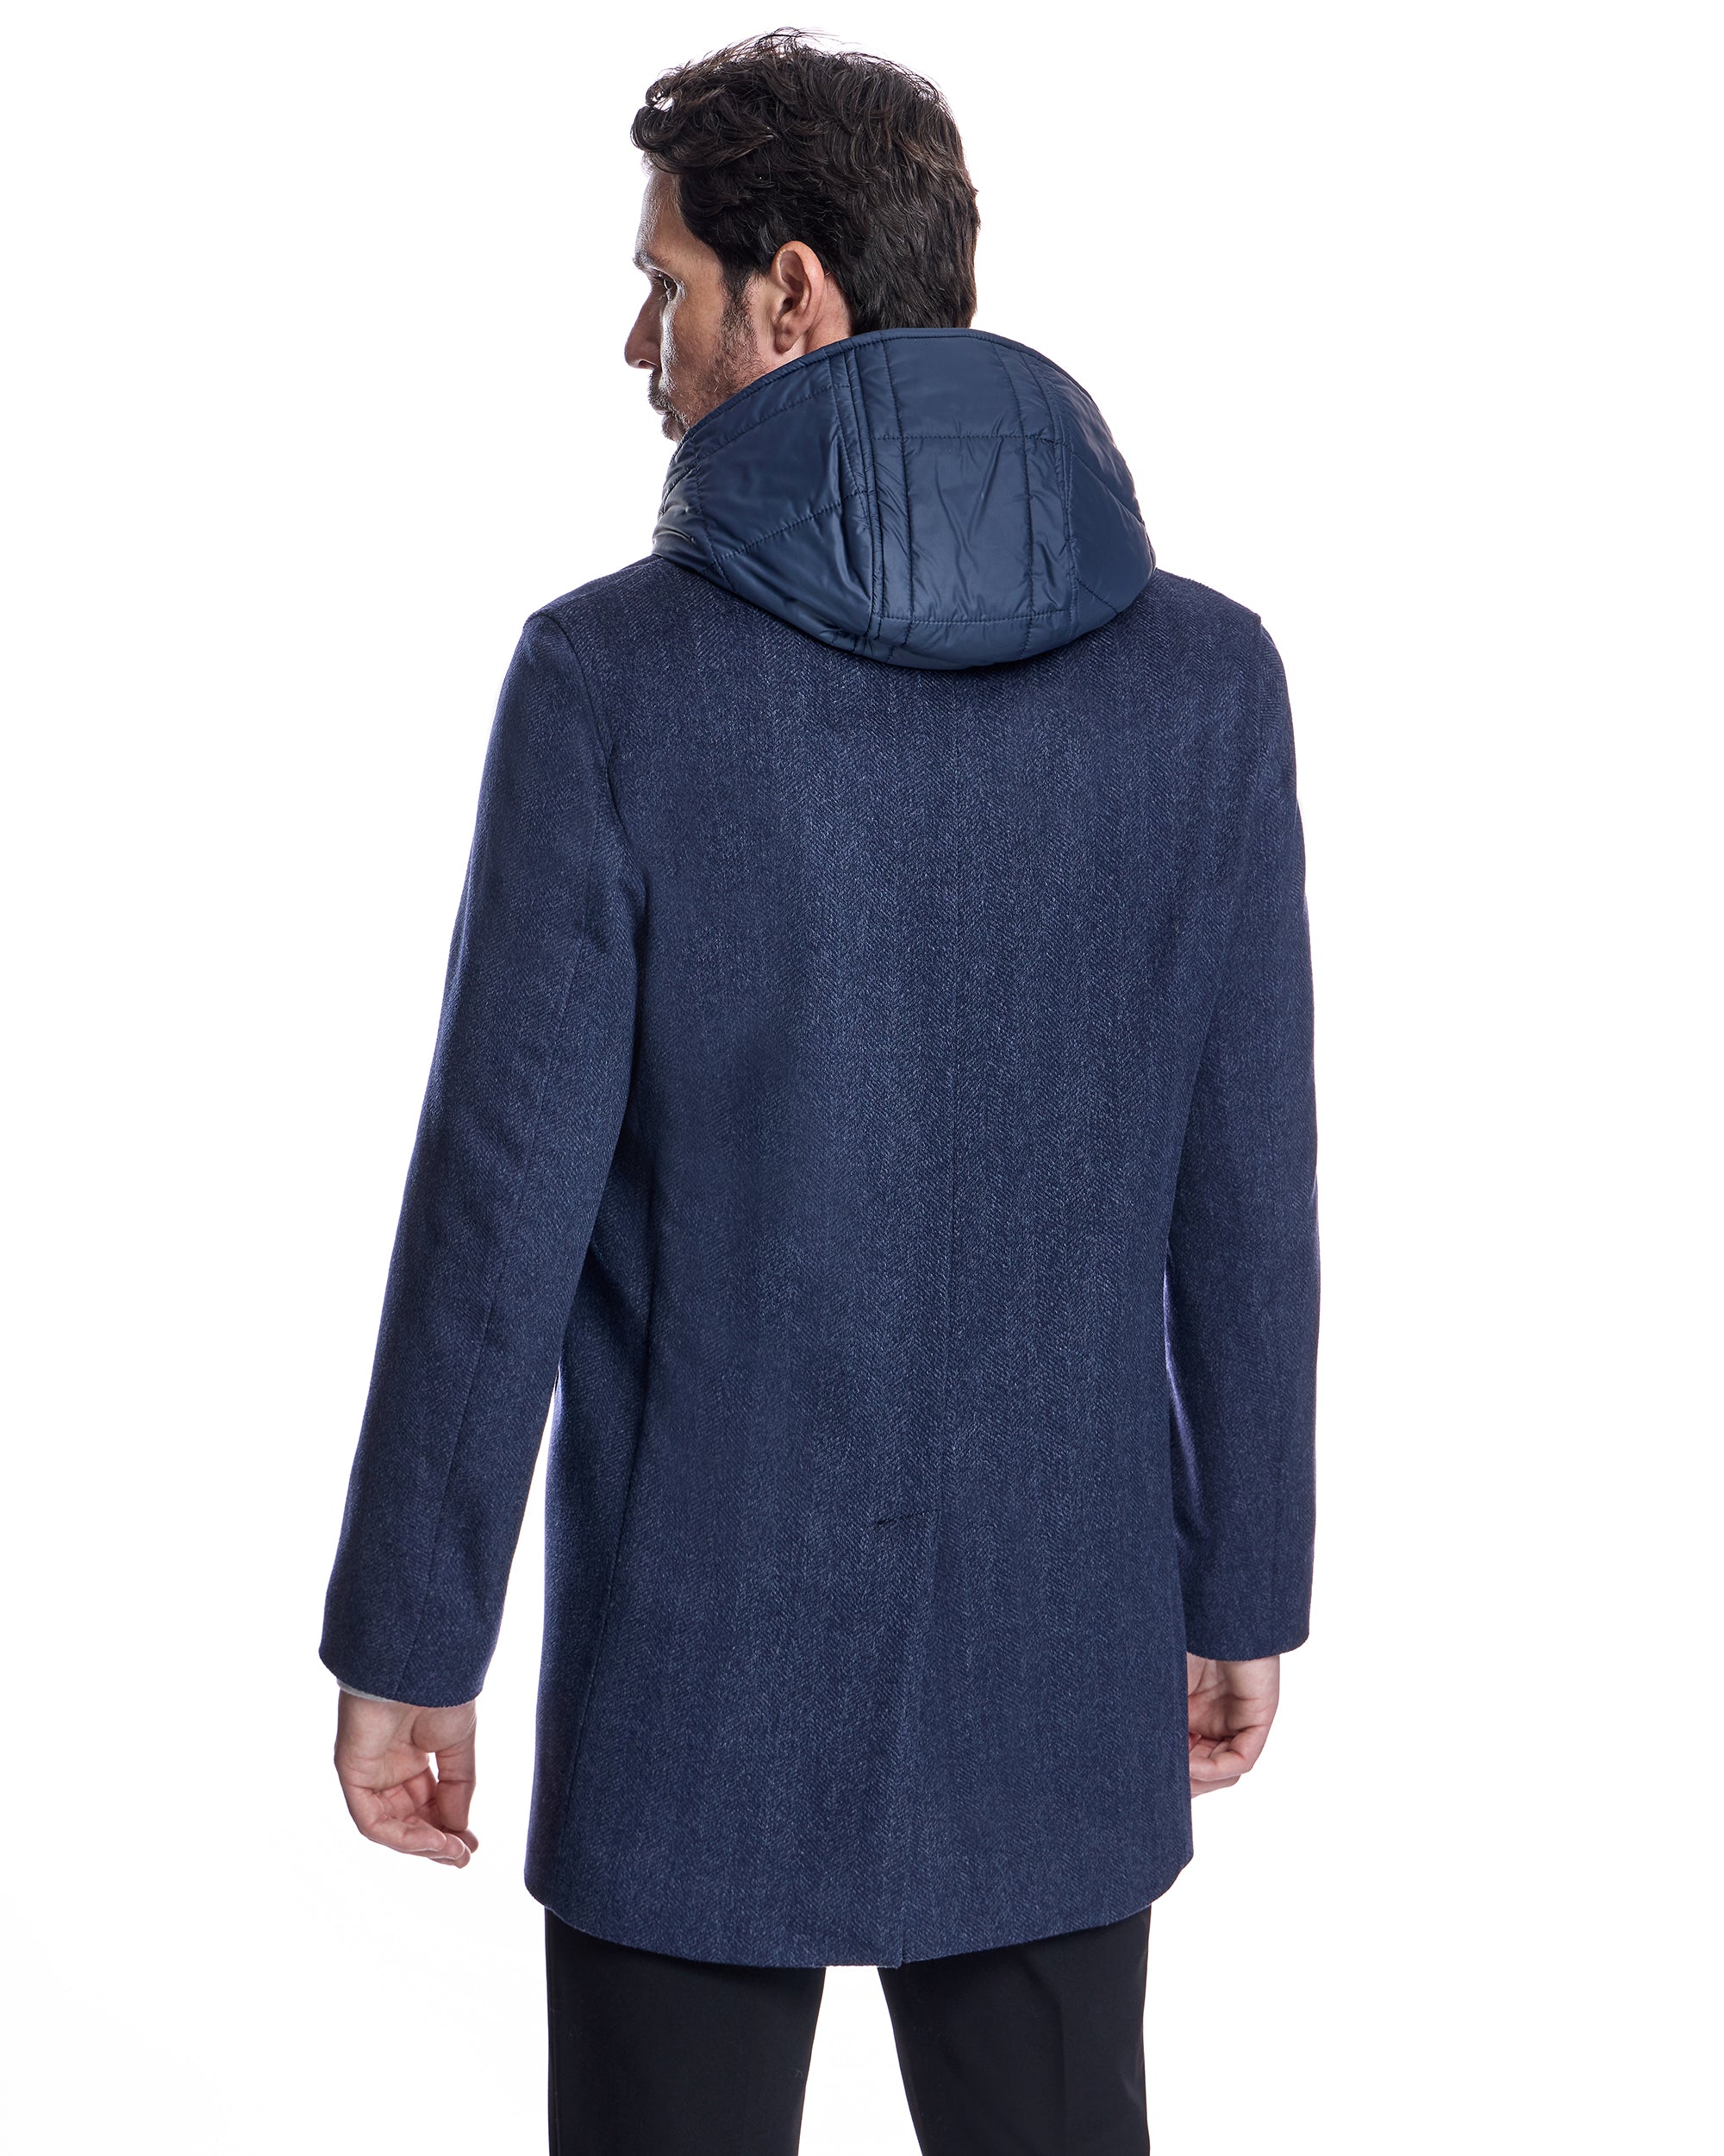 Men's Hooded Wool Jacket